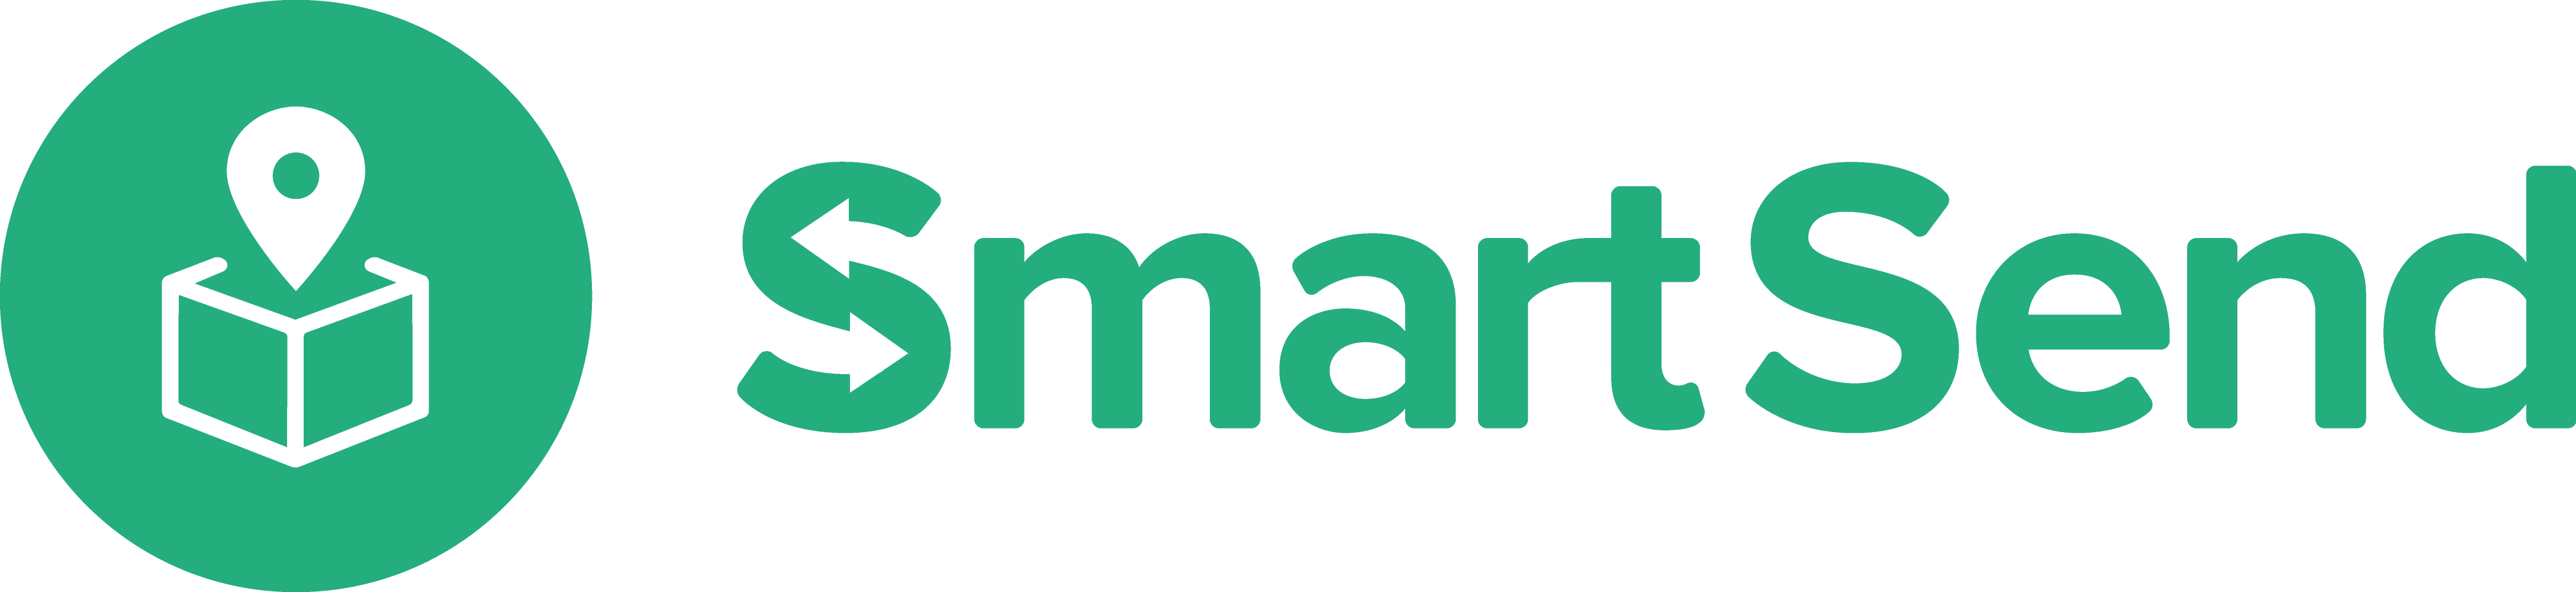 Smart-Send logo